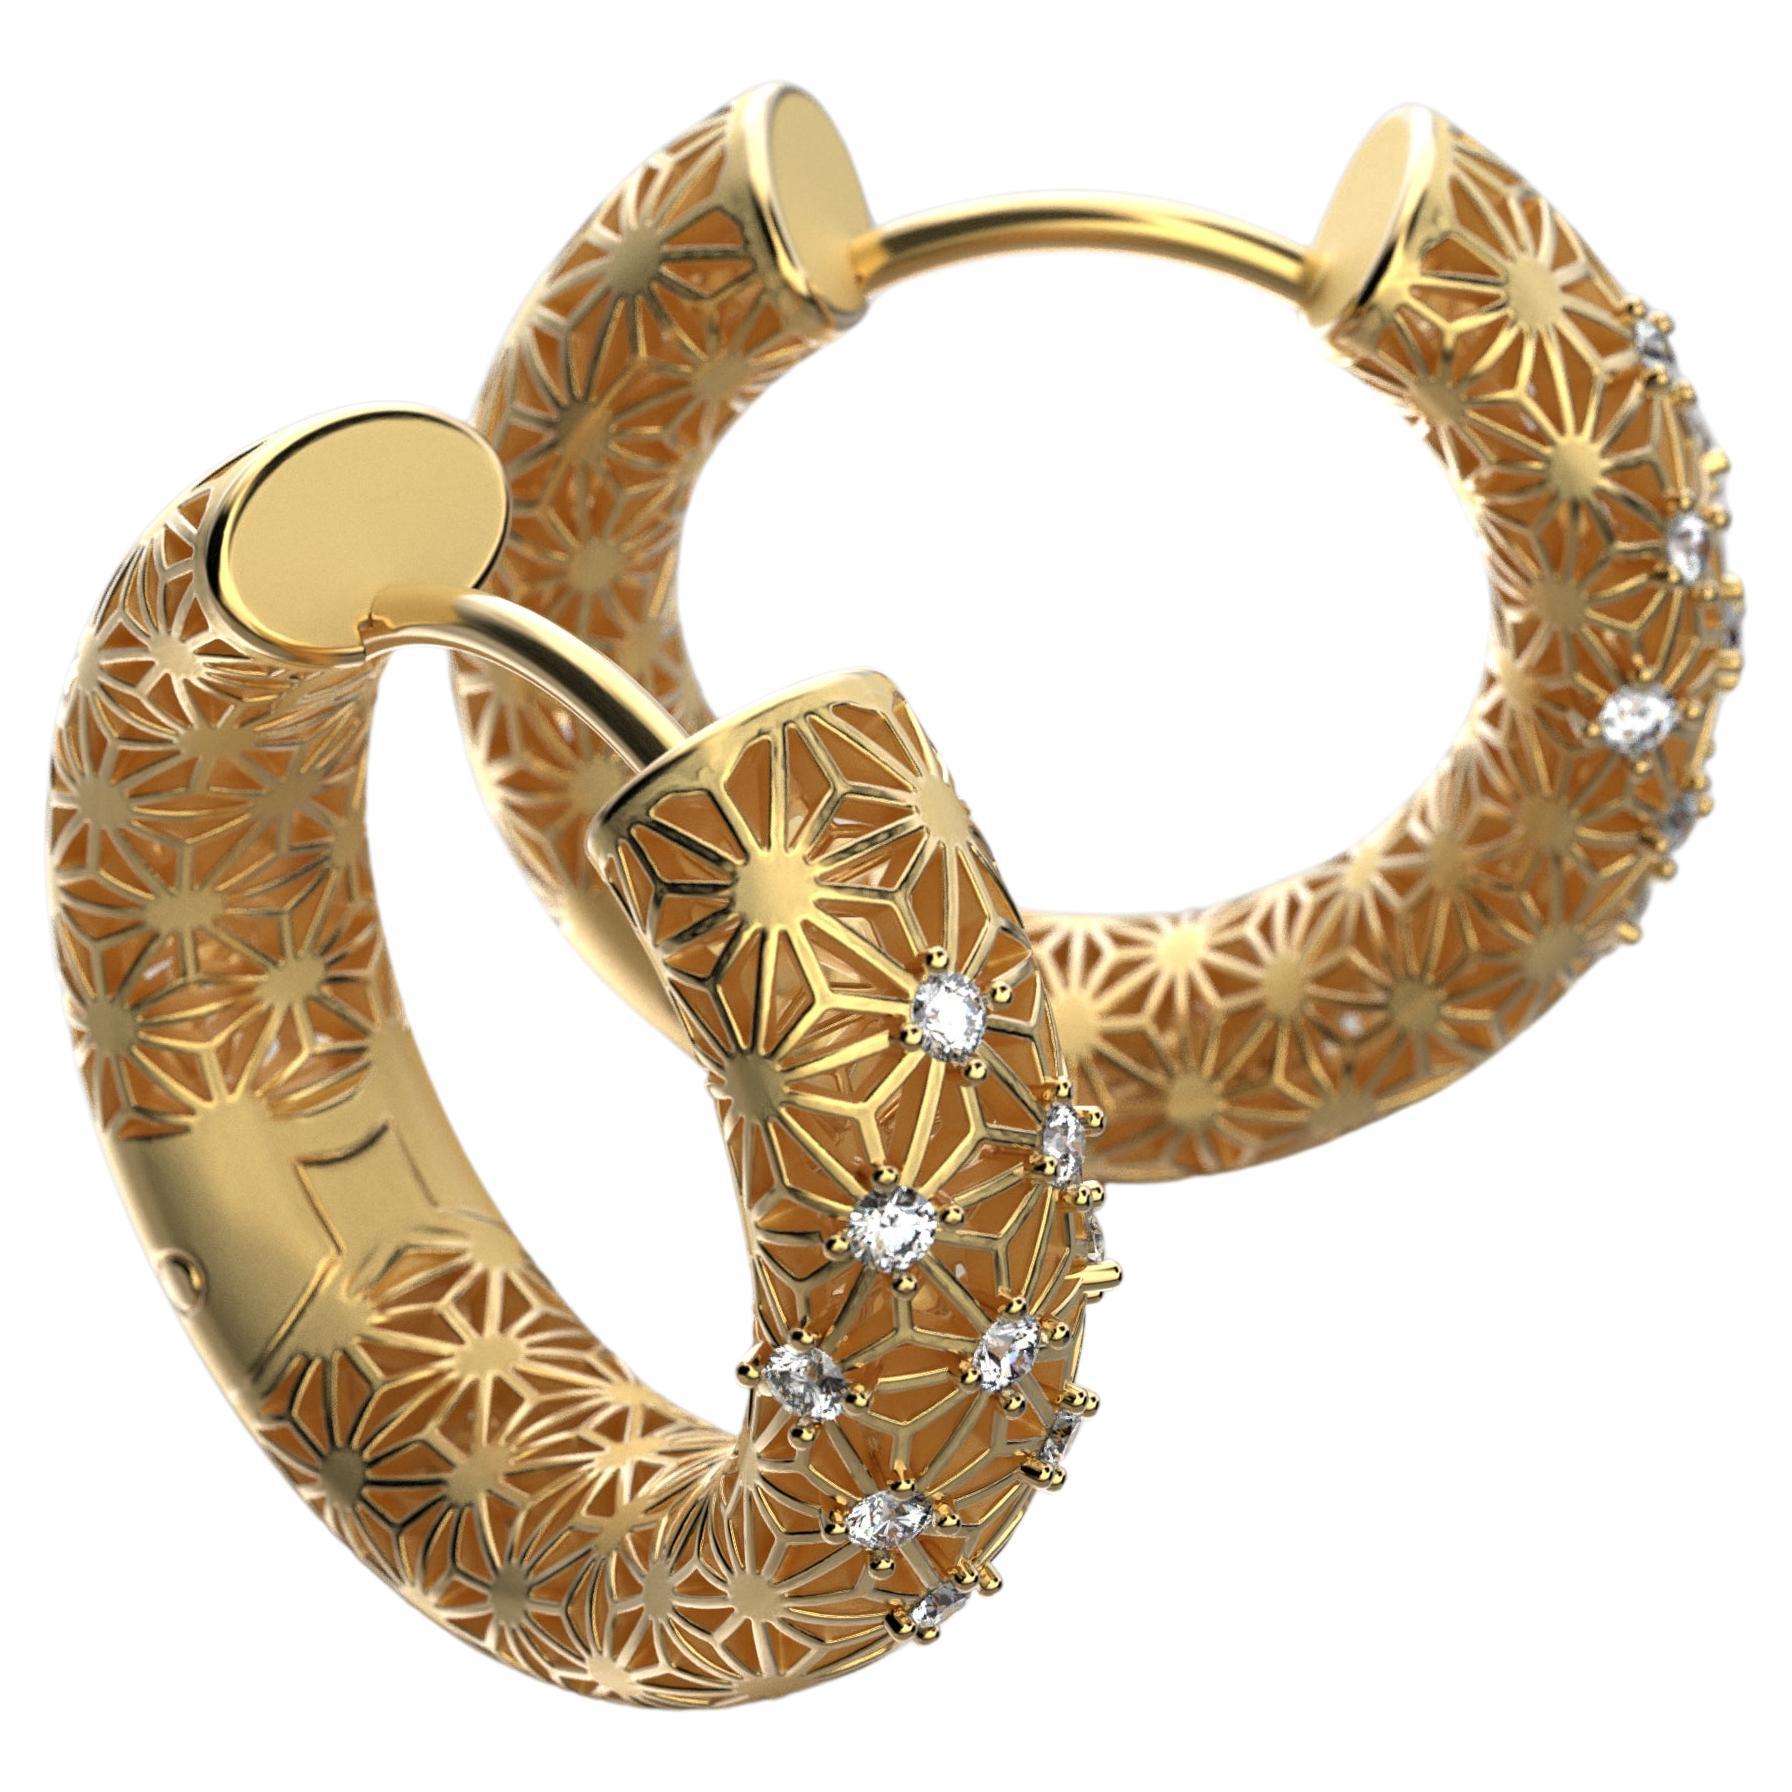  14K Italian Gold Diamond Hoop Earrings - Sashiko Pattern - Oltremare Gioielli For Sale